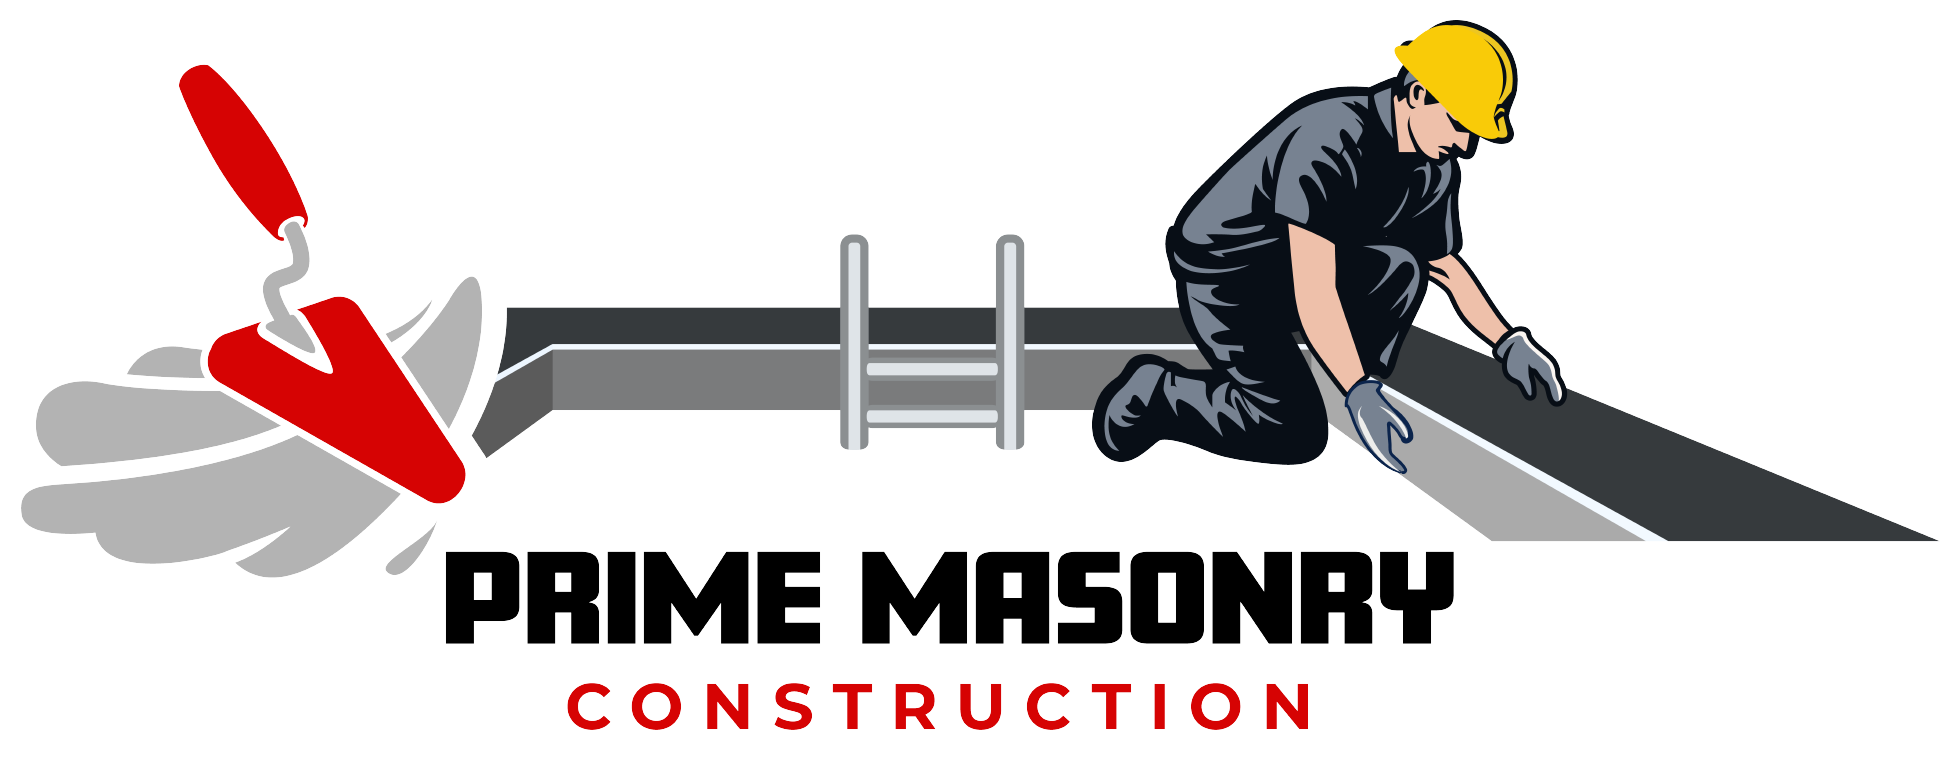 Prime Masonry Construction